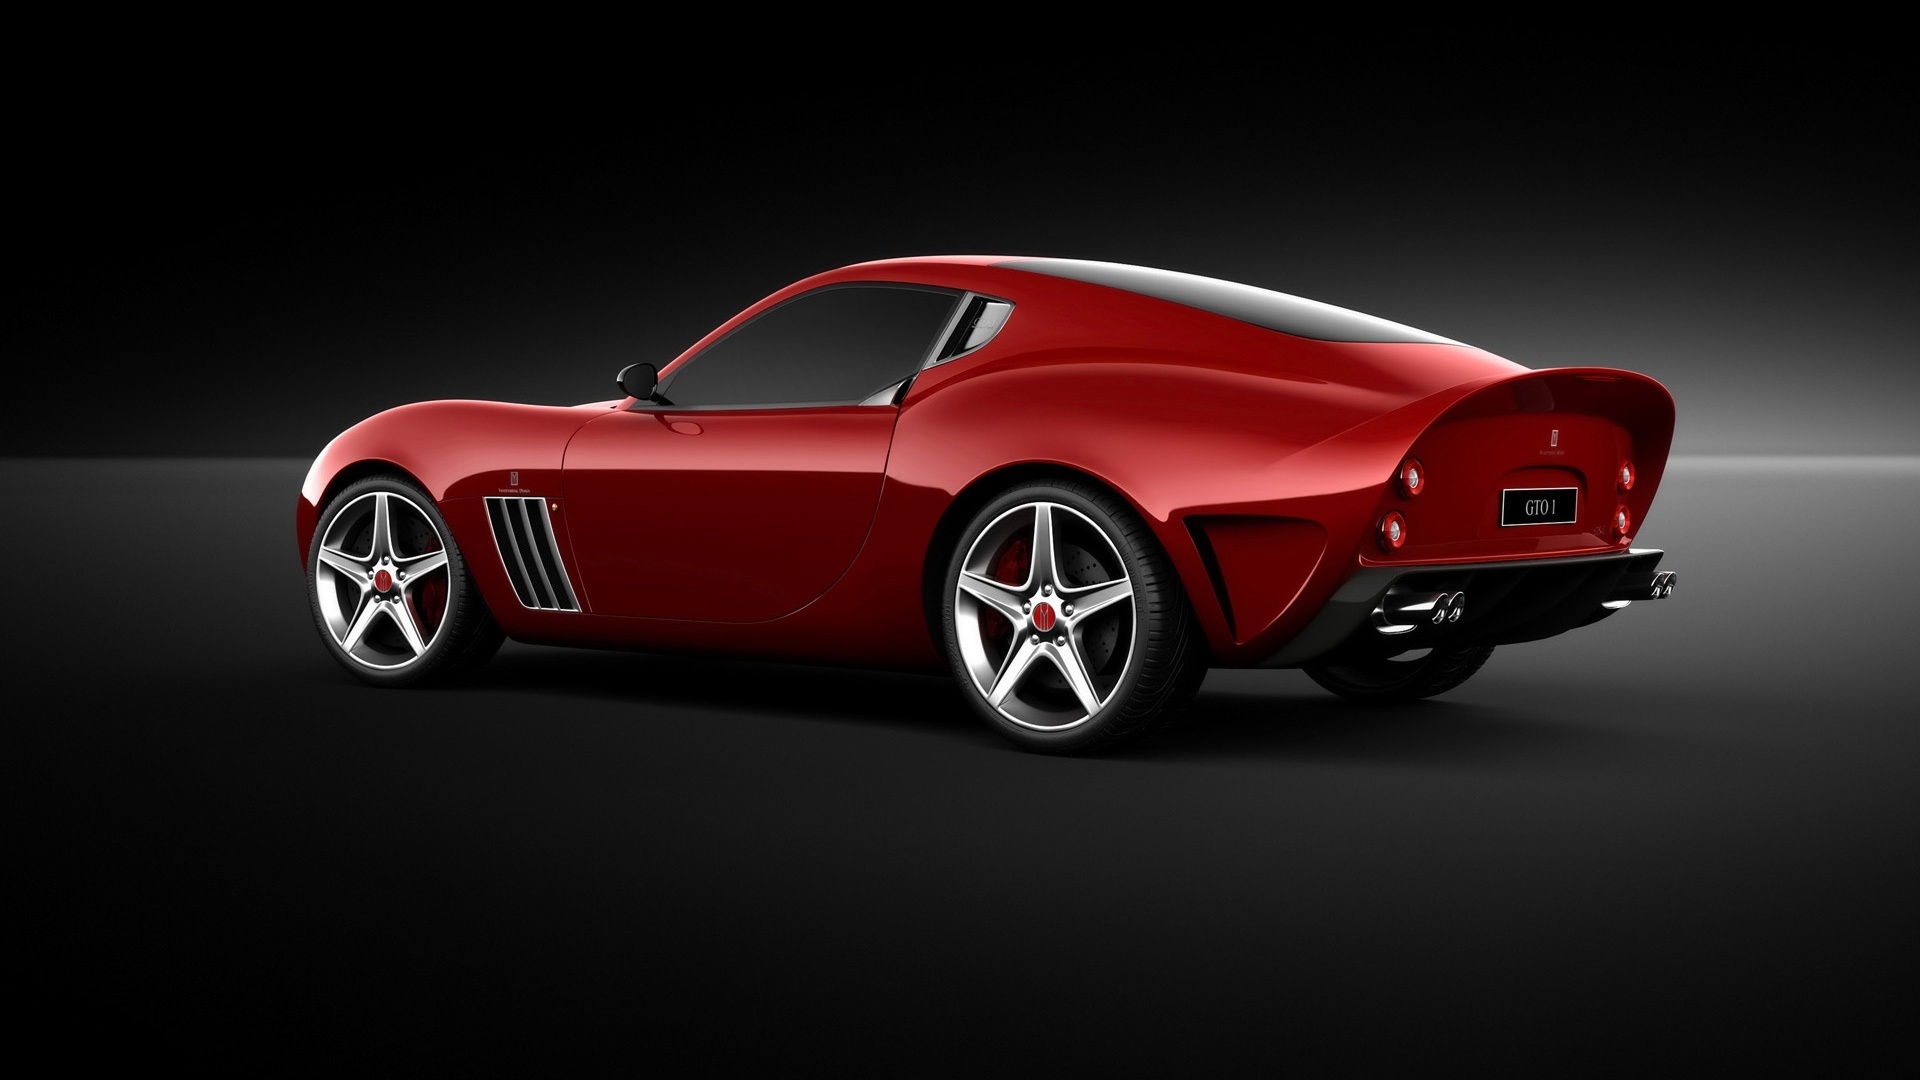 Ferrari Vandenbrink 599 GTO 2009 for 1920 x 1080 HDTV 1080p resolution